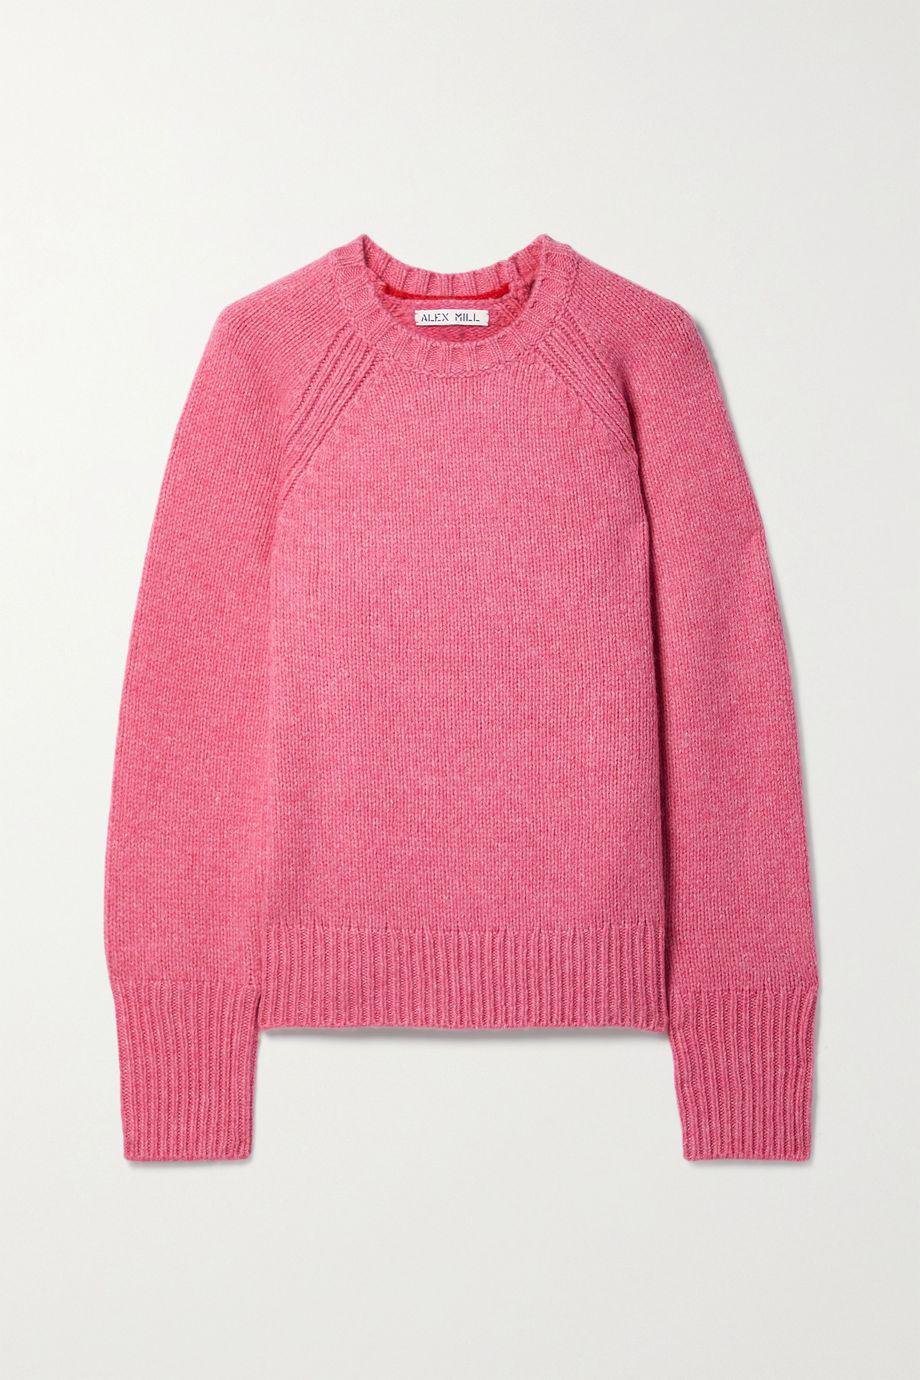 Greta wool-blend sweater by ALEX MILL